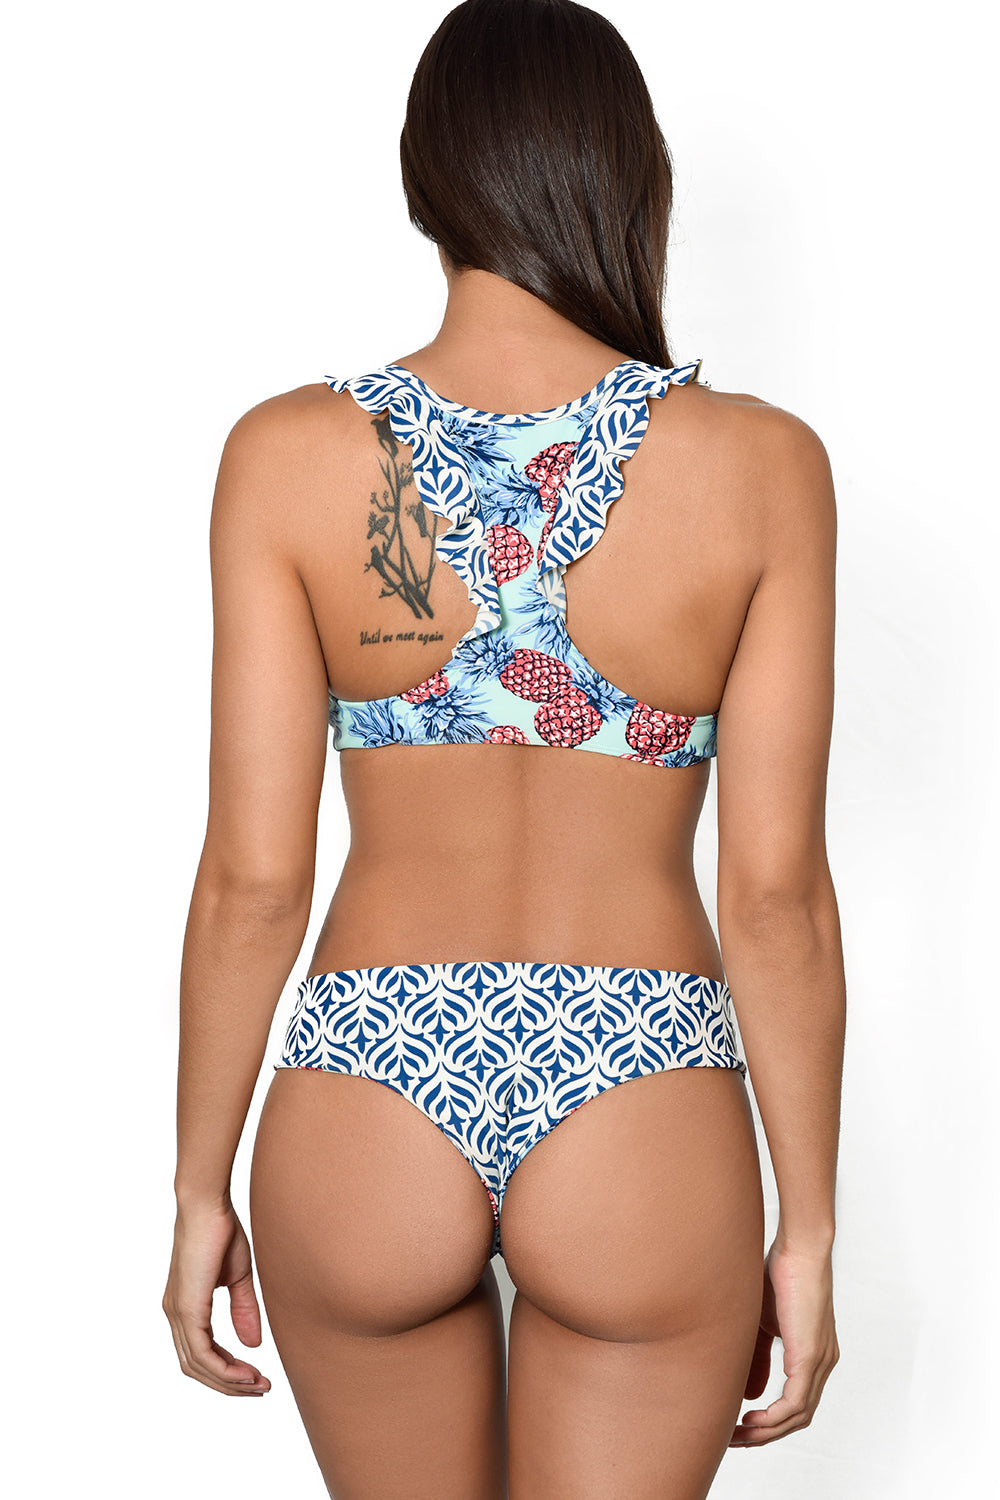 PINEAPPLE FEST Reversible Bikini Bottom by Maya Swimwear